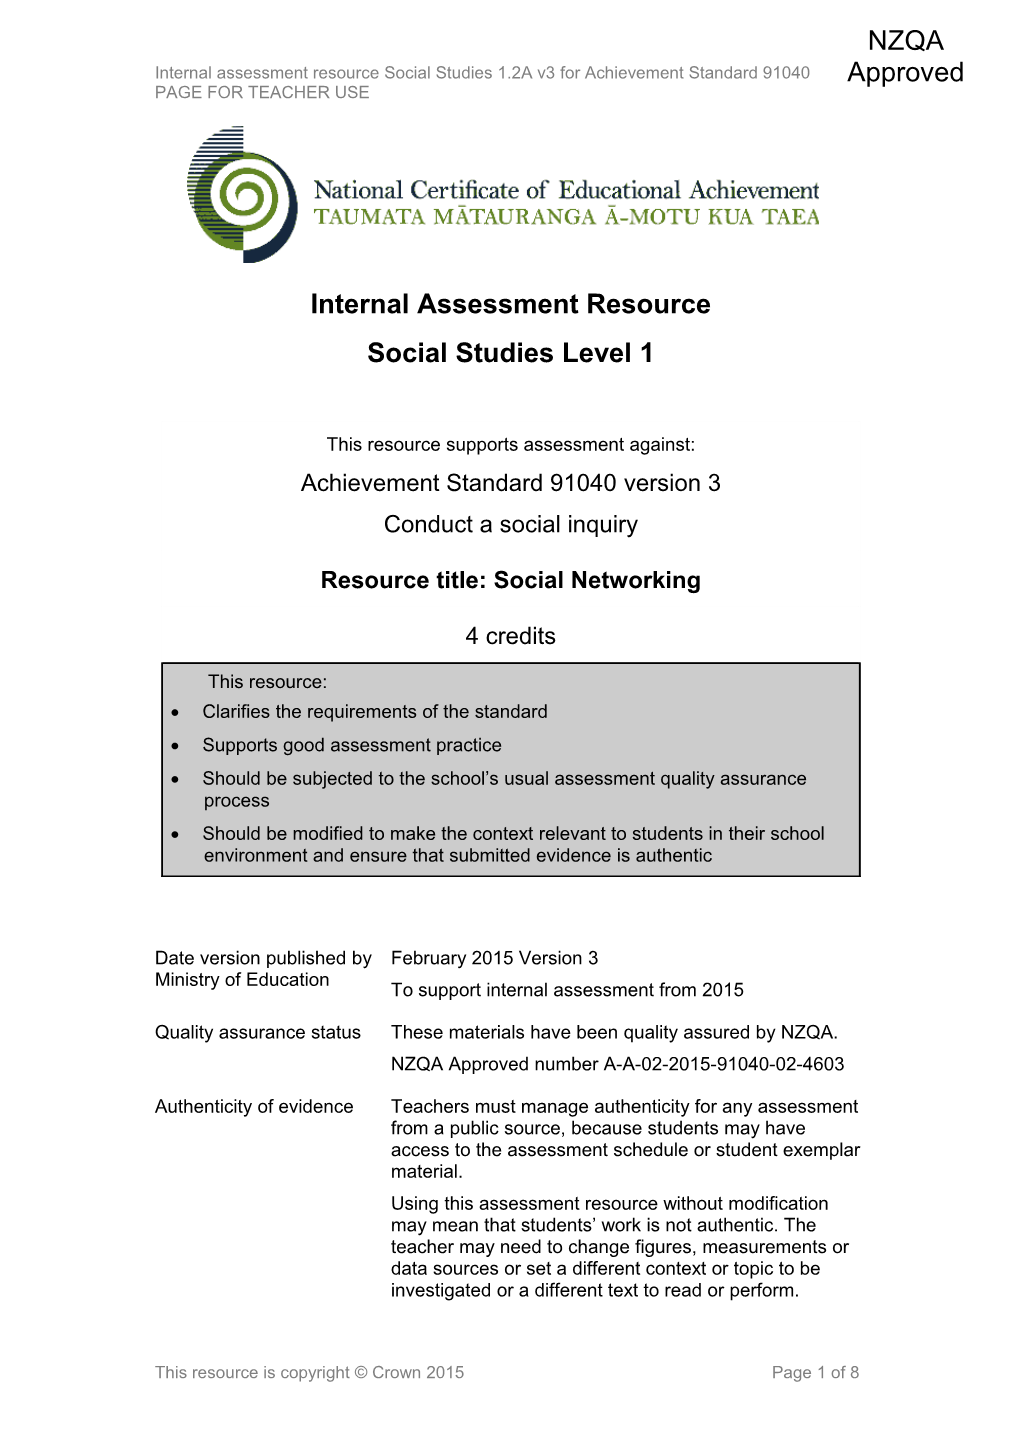 Level 1 Social Studies Internal Assessment Resource